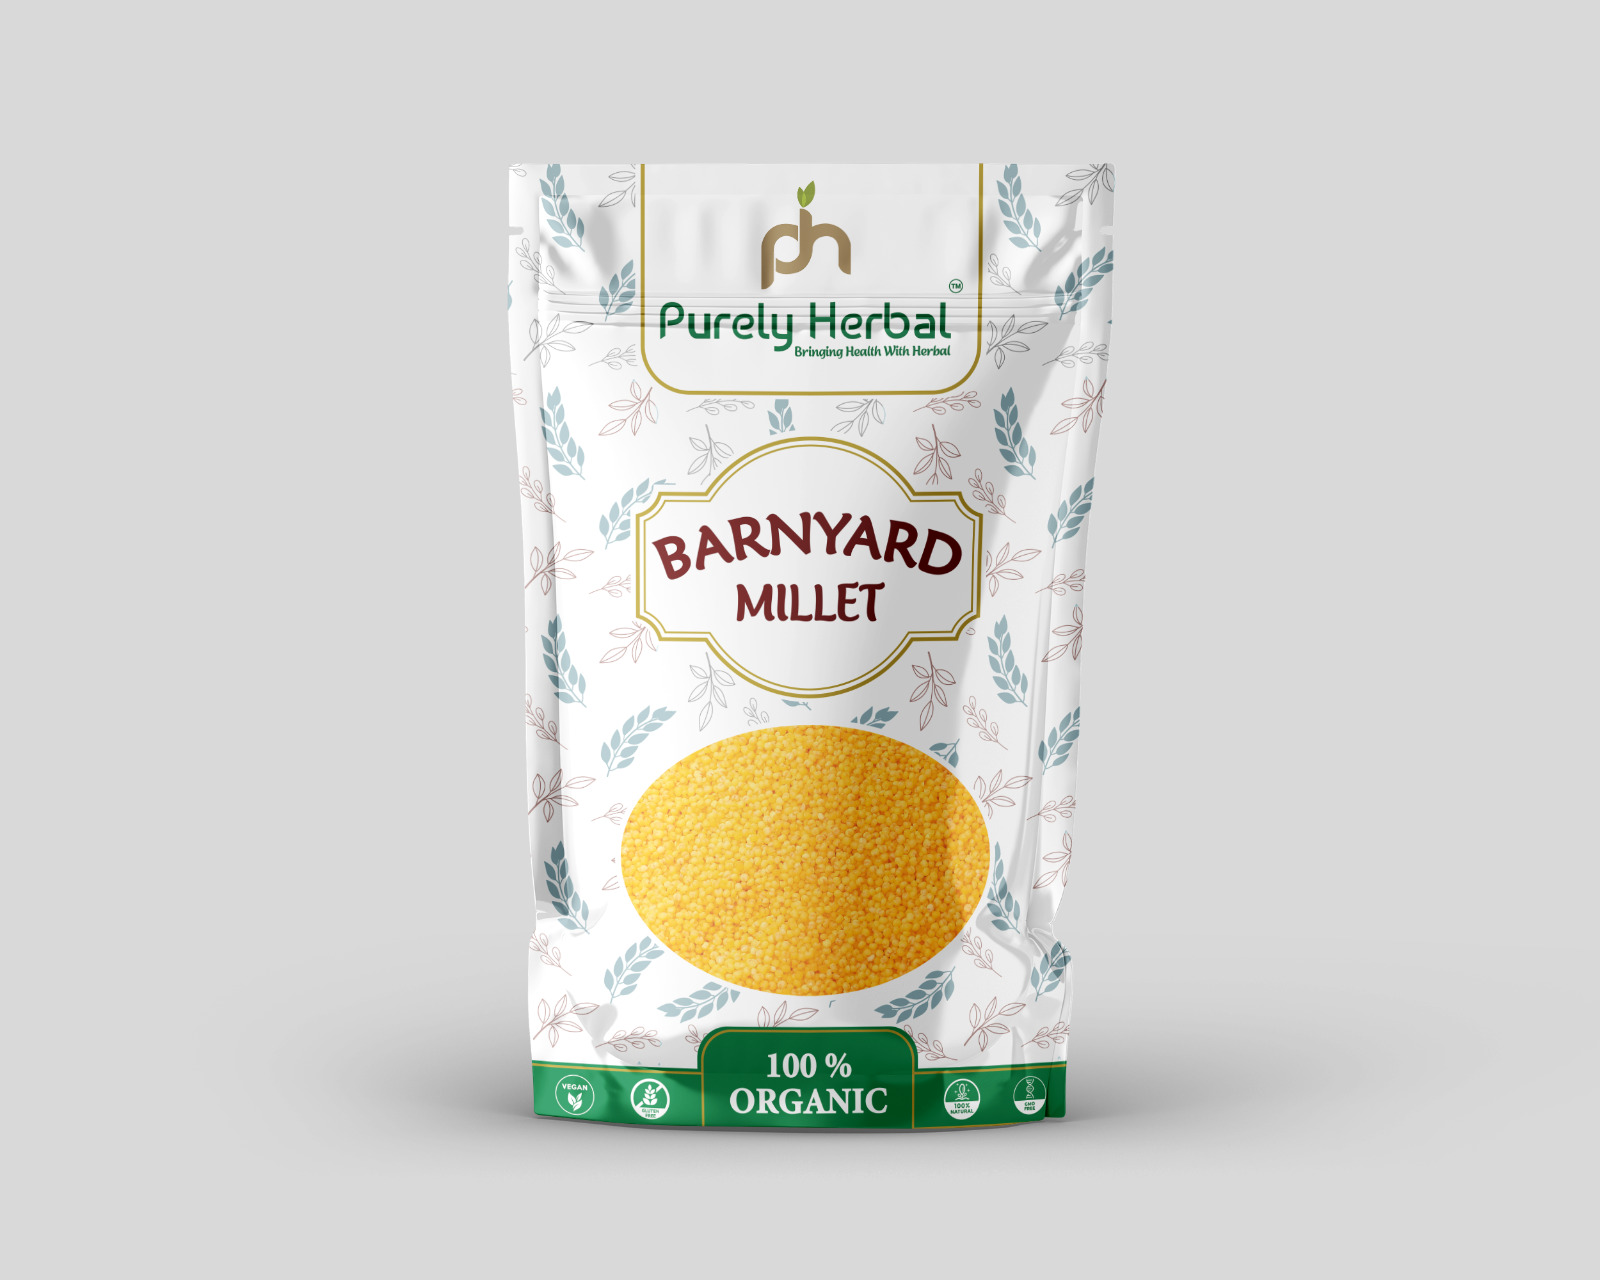 Purely Herbal Barnyard Millet